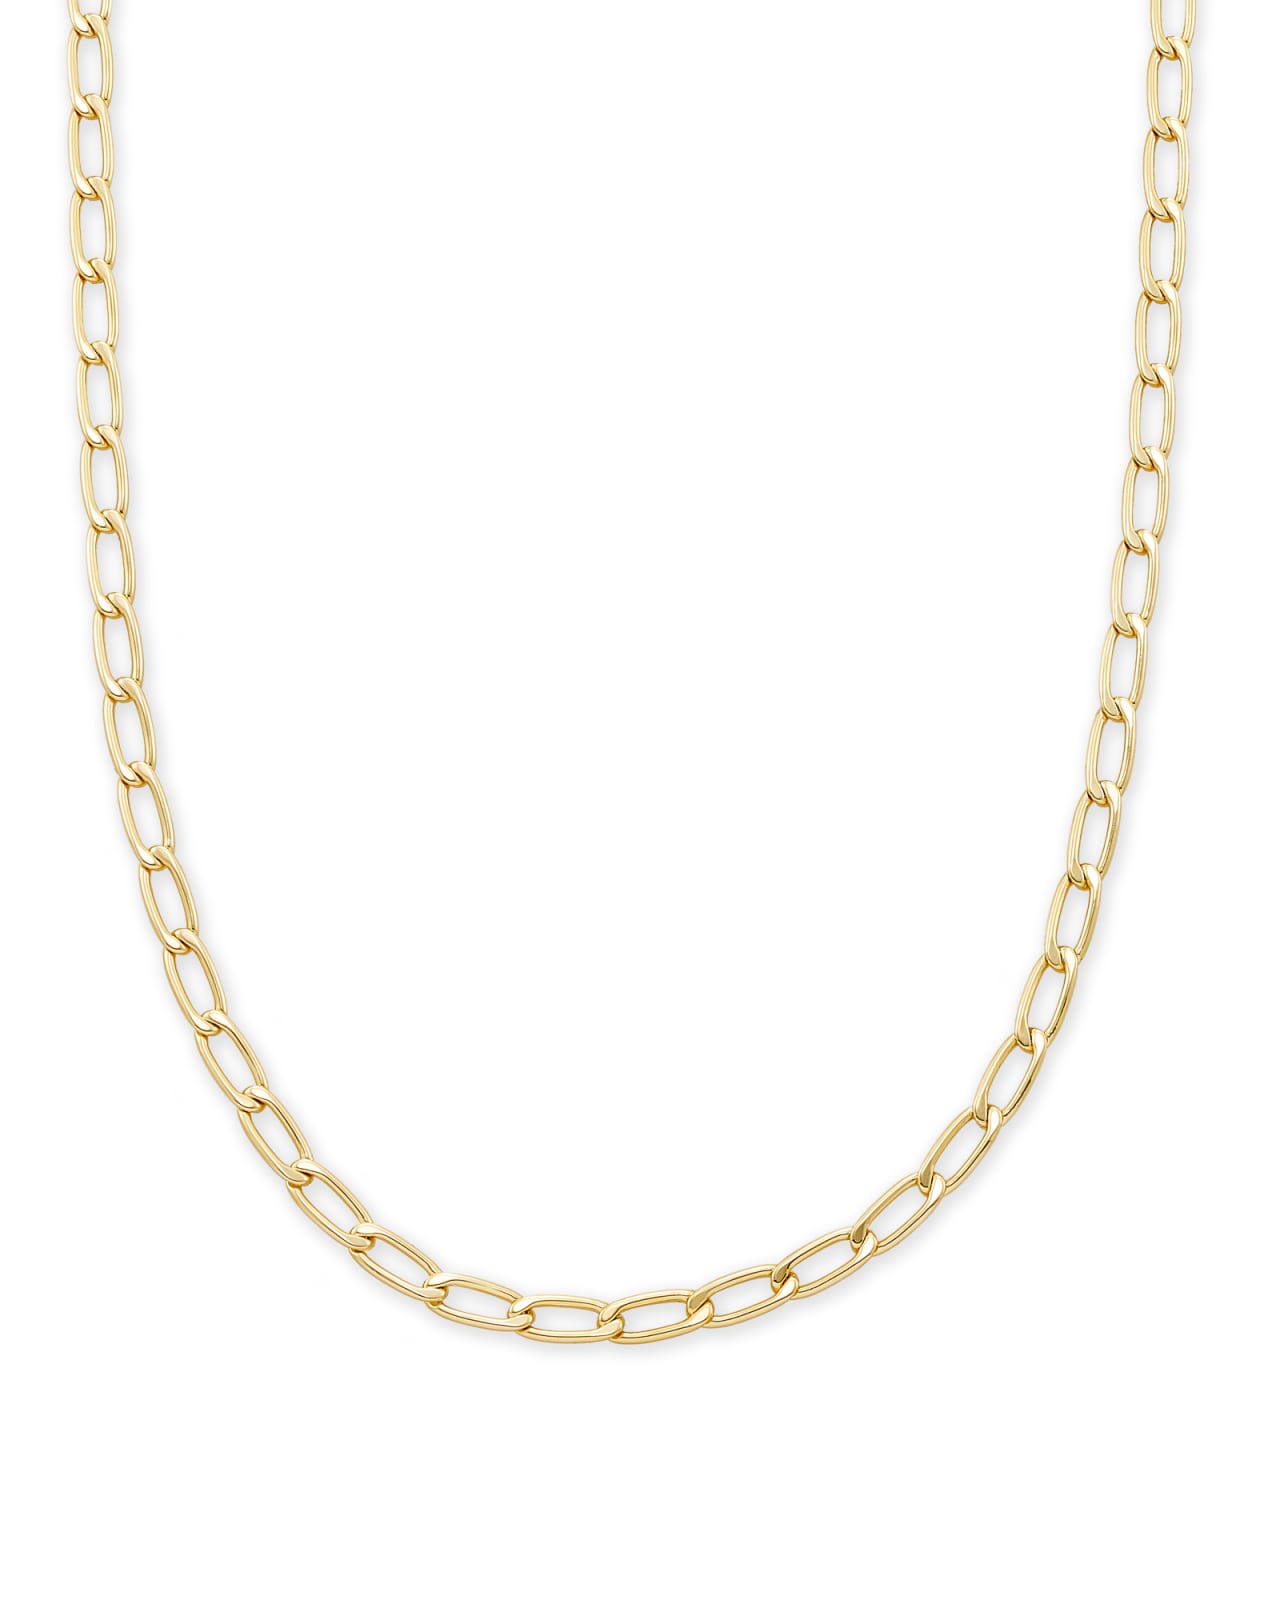 Merrick Chain Necklace in Gold | Kendra Scott